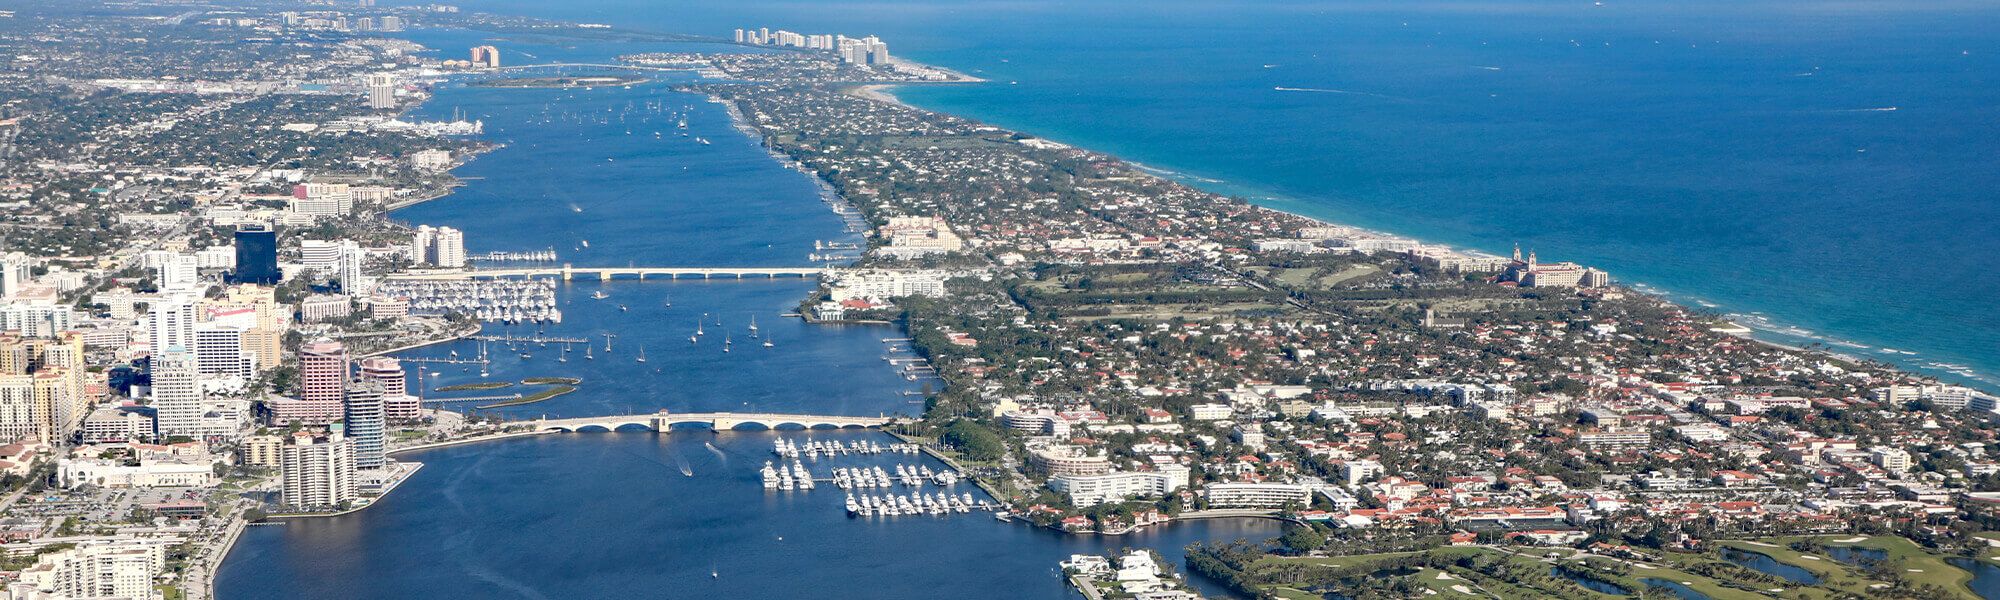 Korber Exhibition - West Palm Beach Aerial